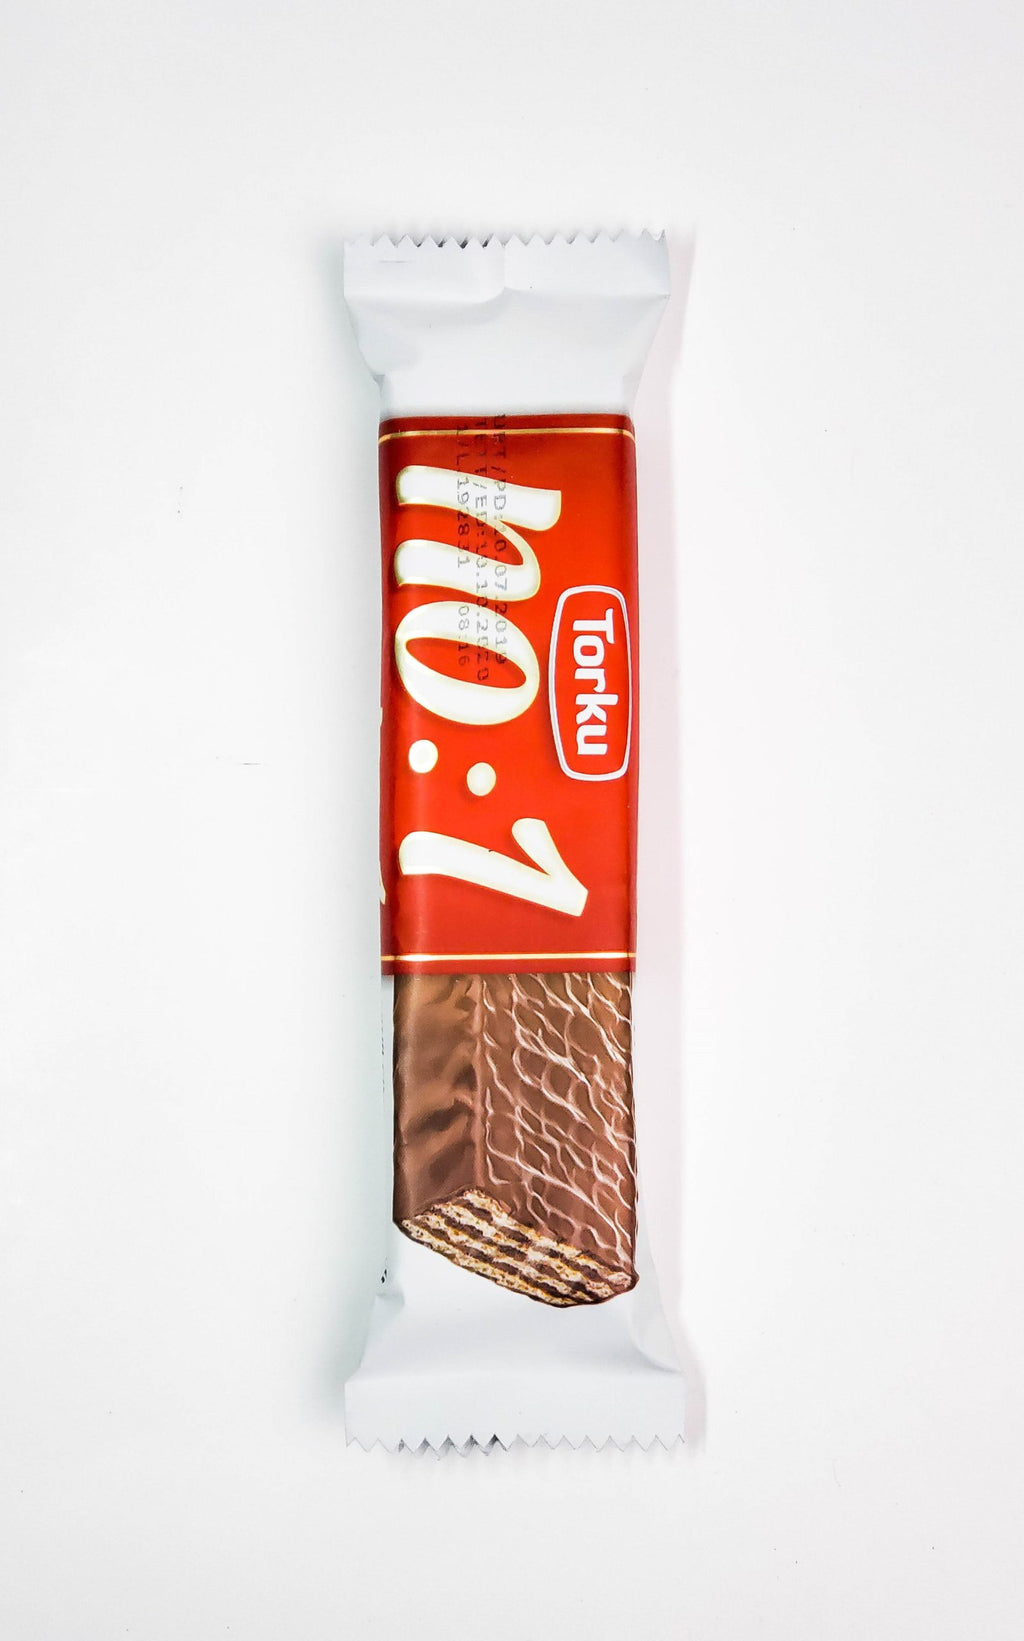 Torku no:1 Chocolate